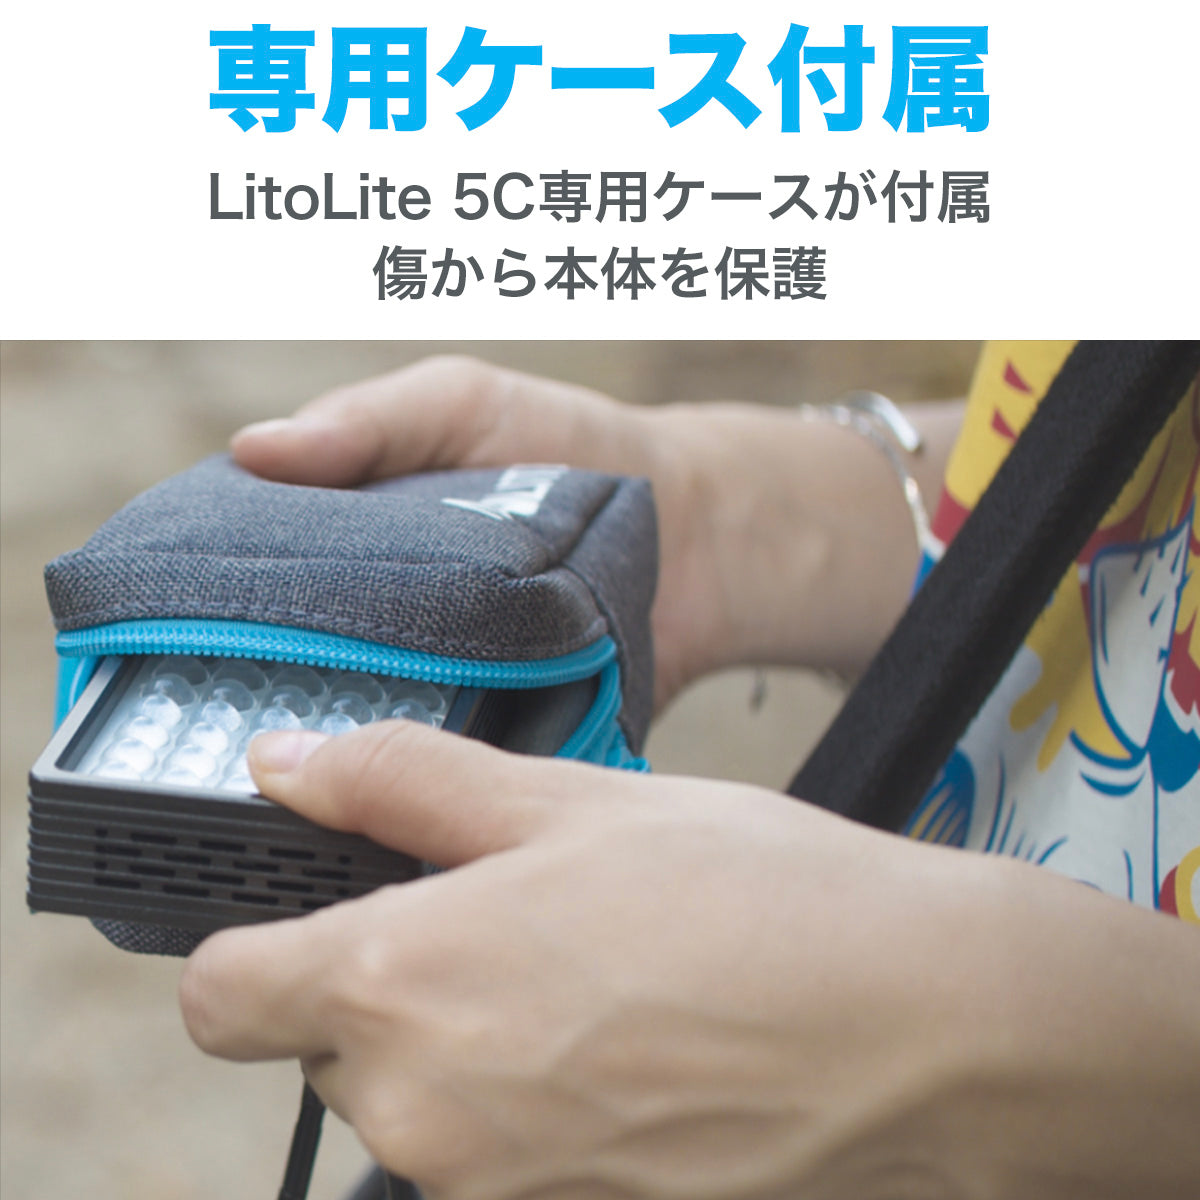 NANLITE LitoLite 5C ナンライト 撮影用ライト RGBライト 定常光ライト 色温度調整 36000色調色 12ヶ月保証